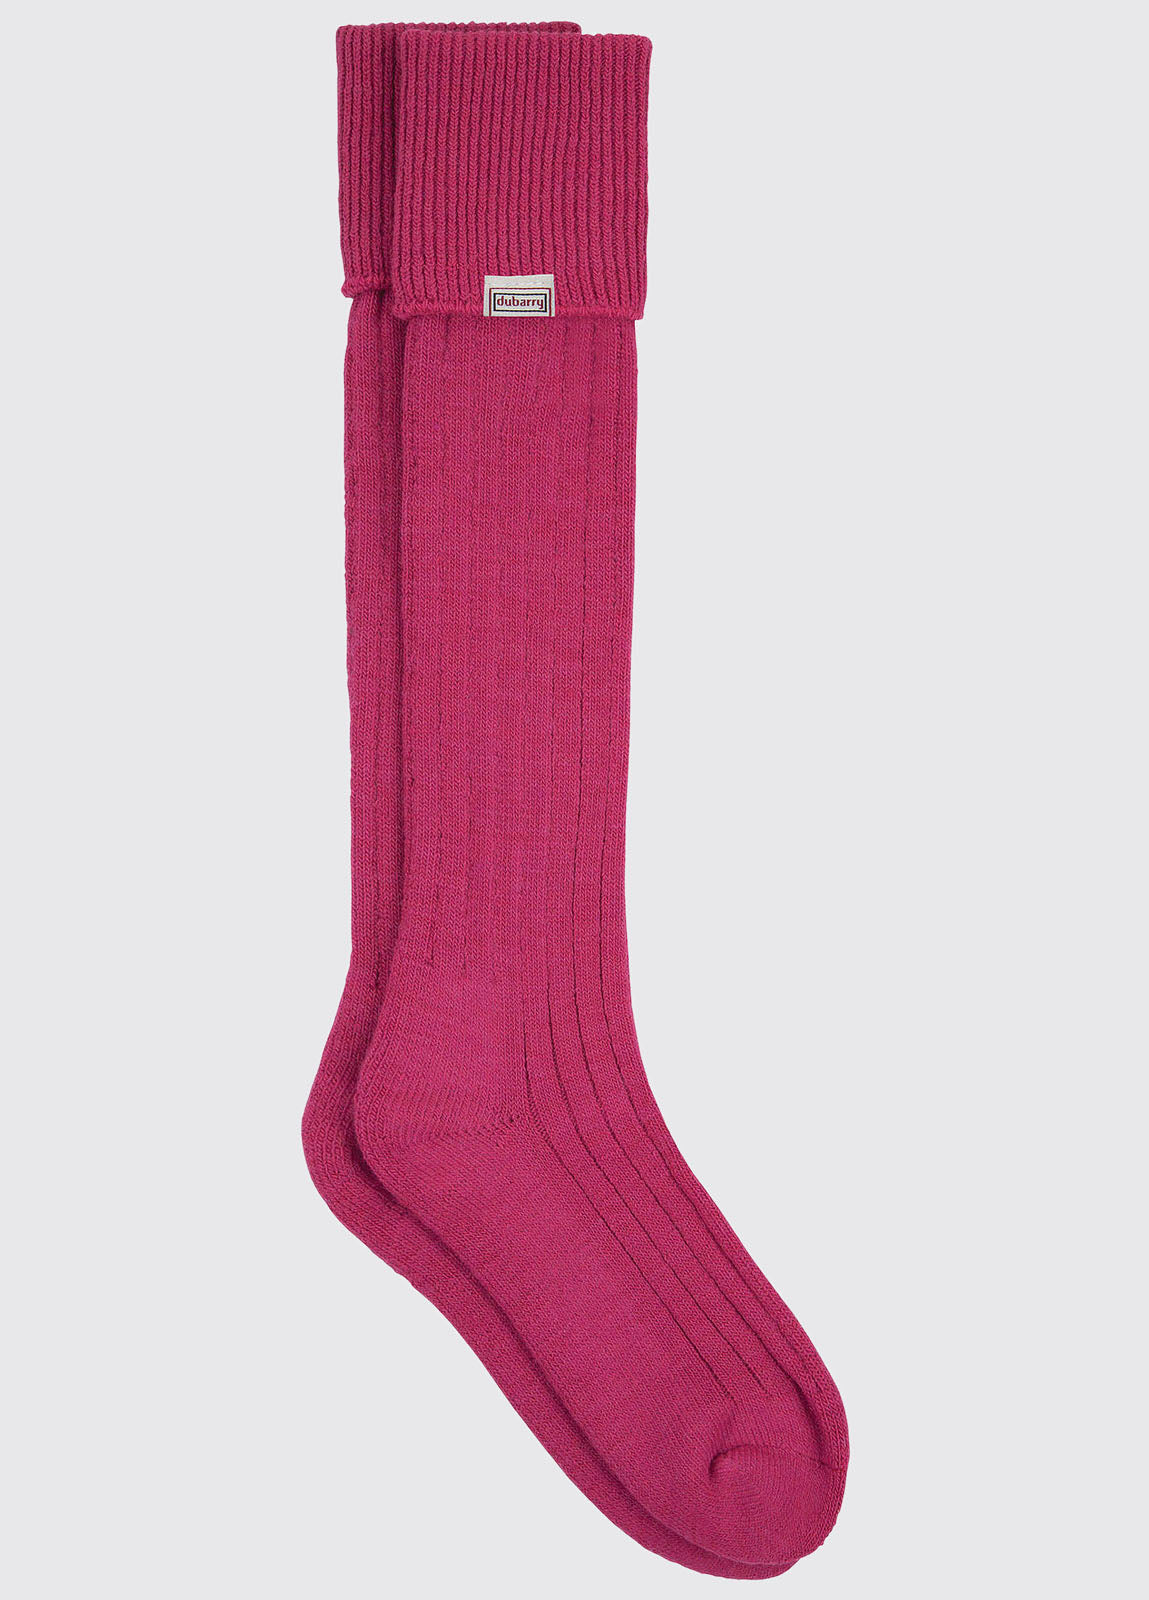 Dubarry of Ireland Alpaca Socks in Pink